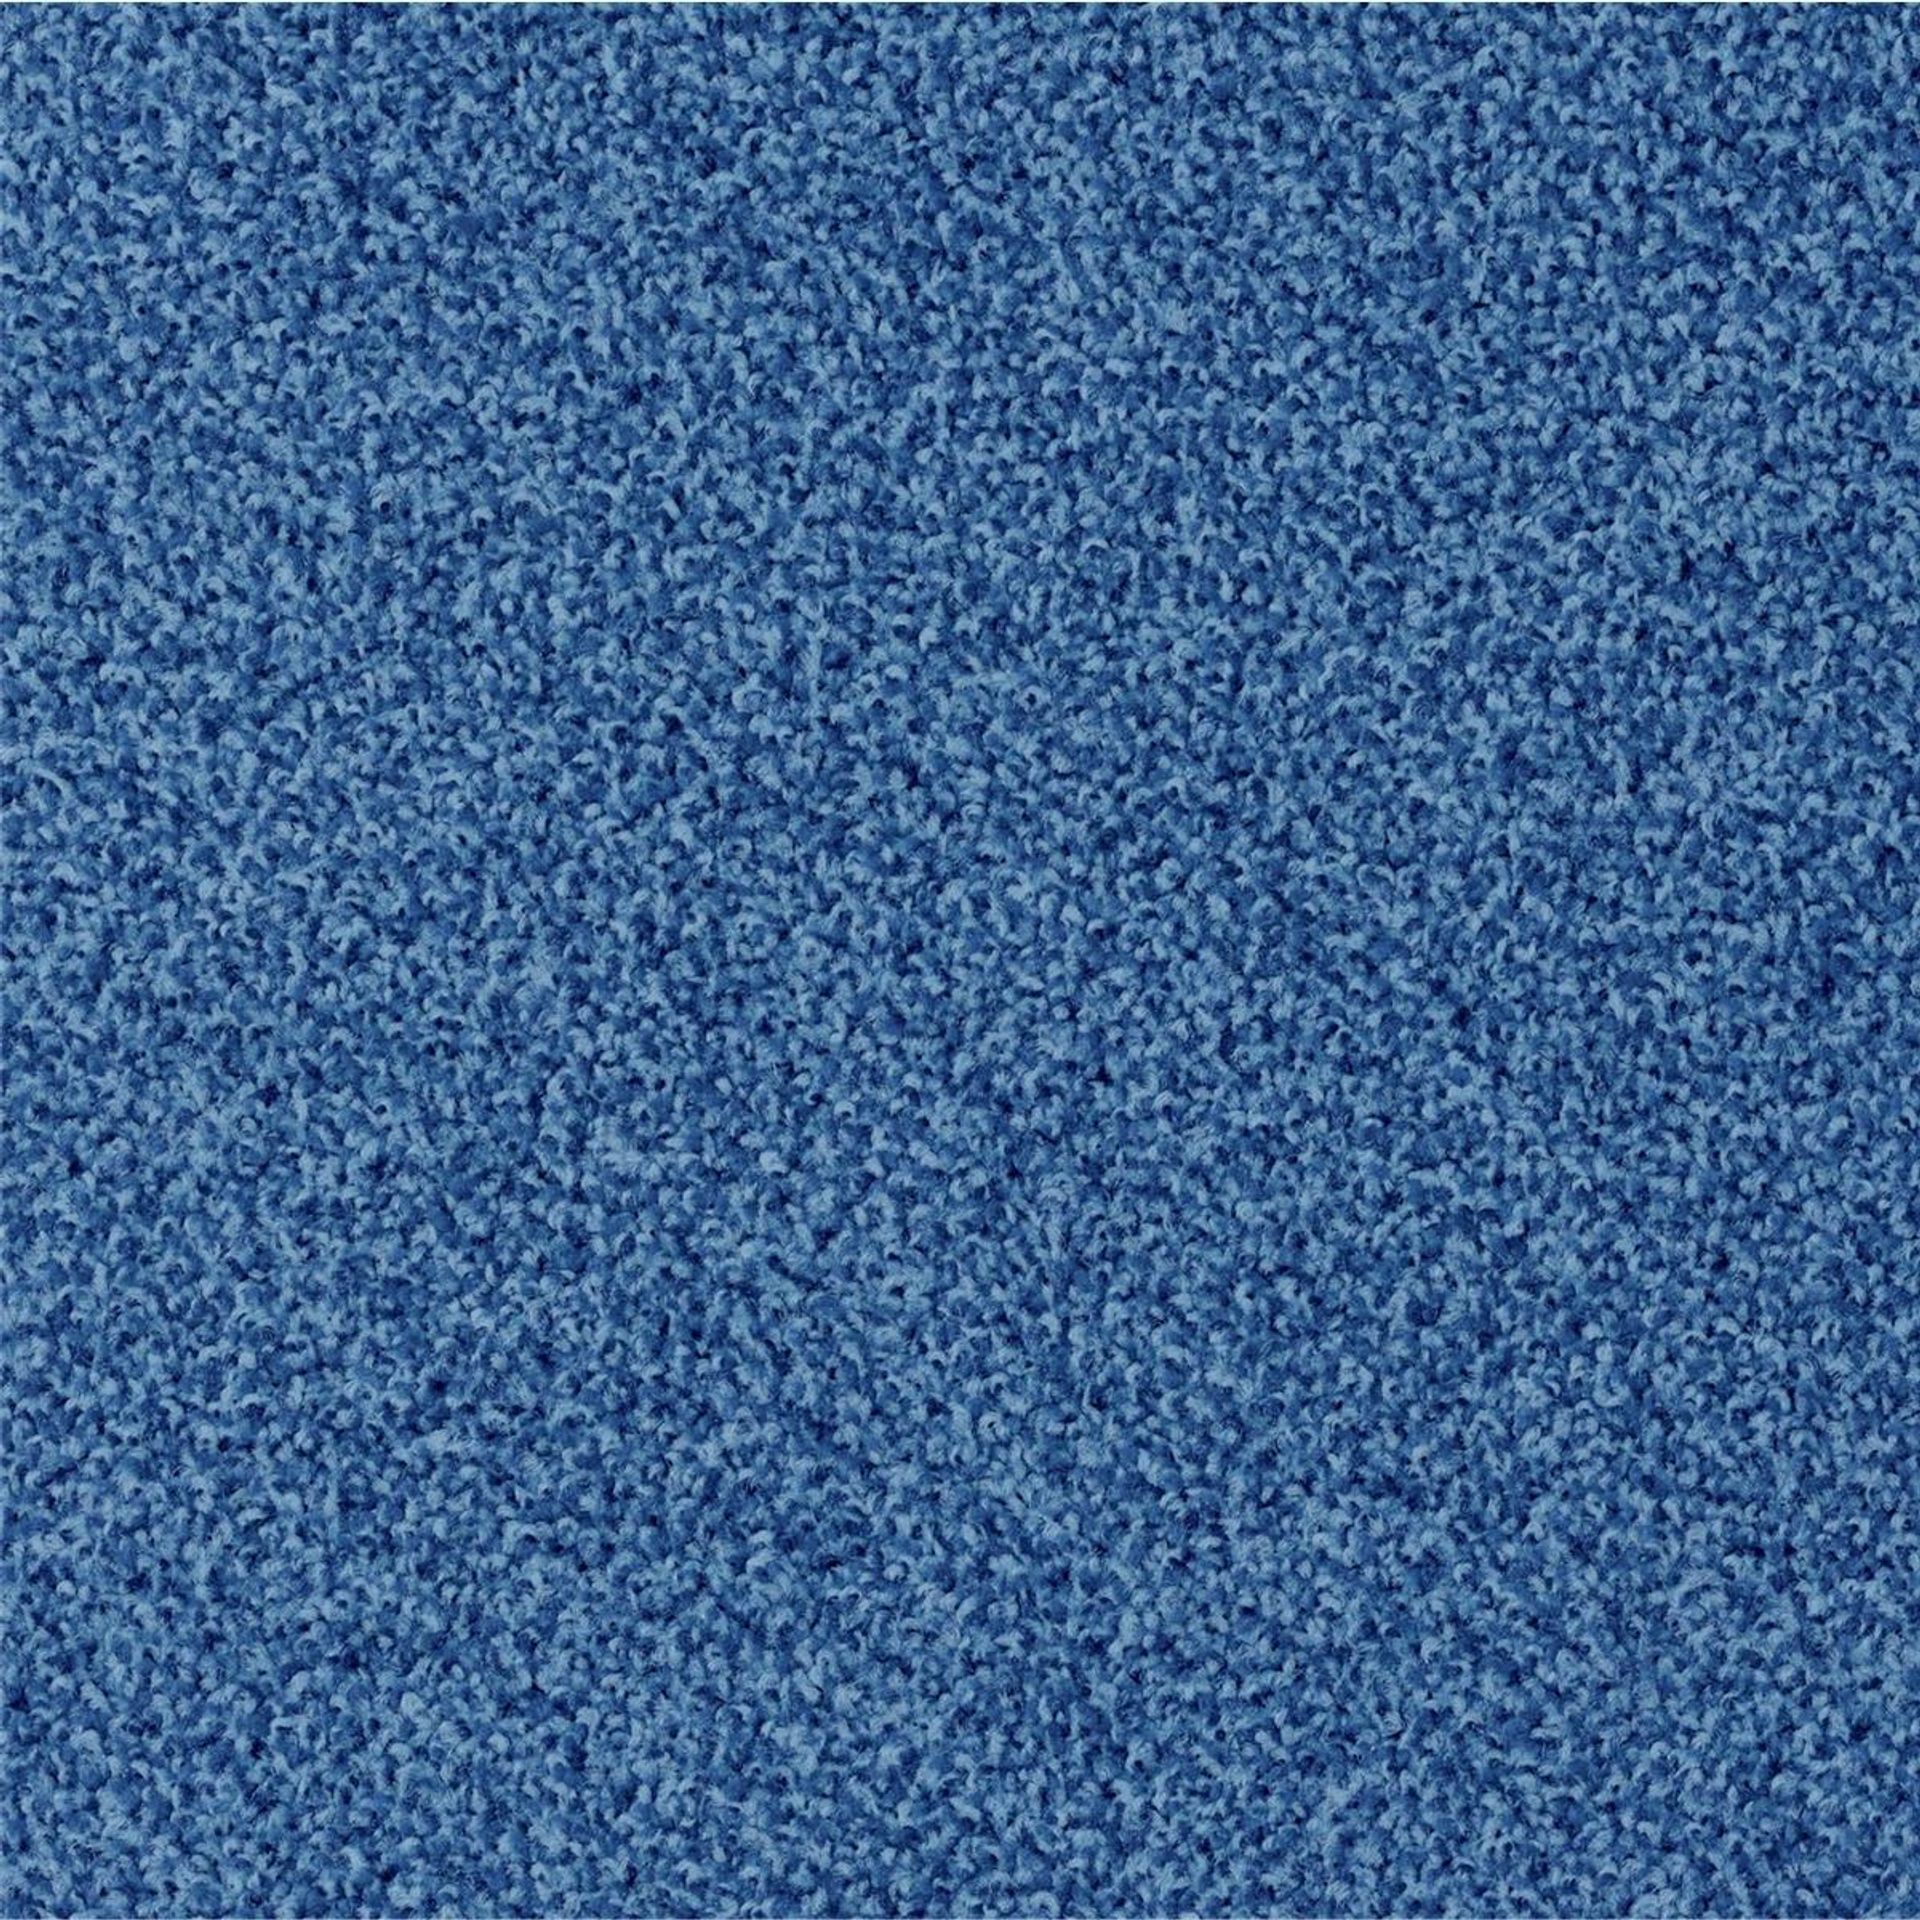 Teppichfliesen 50 x 50 cm Velours Torso A147 8412 Blau Allover